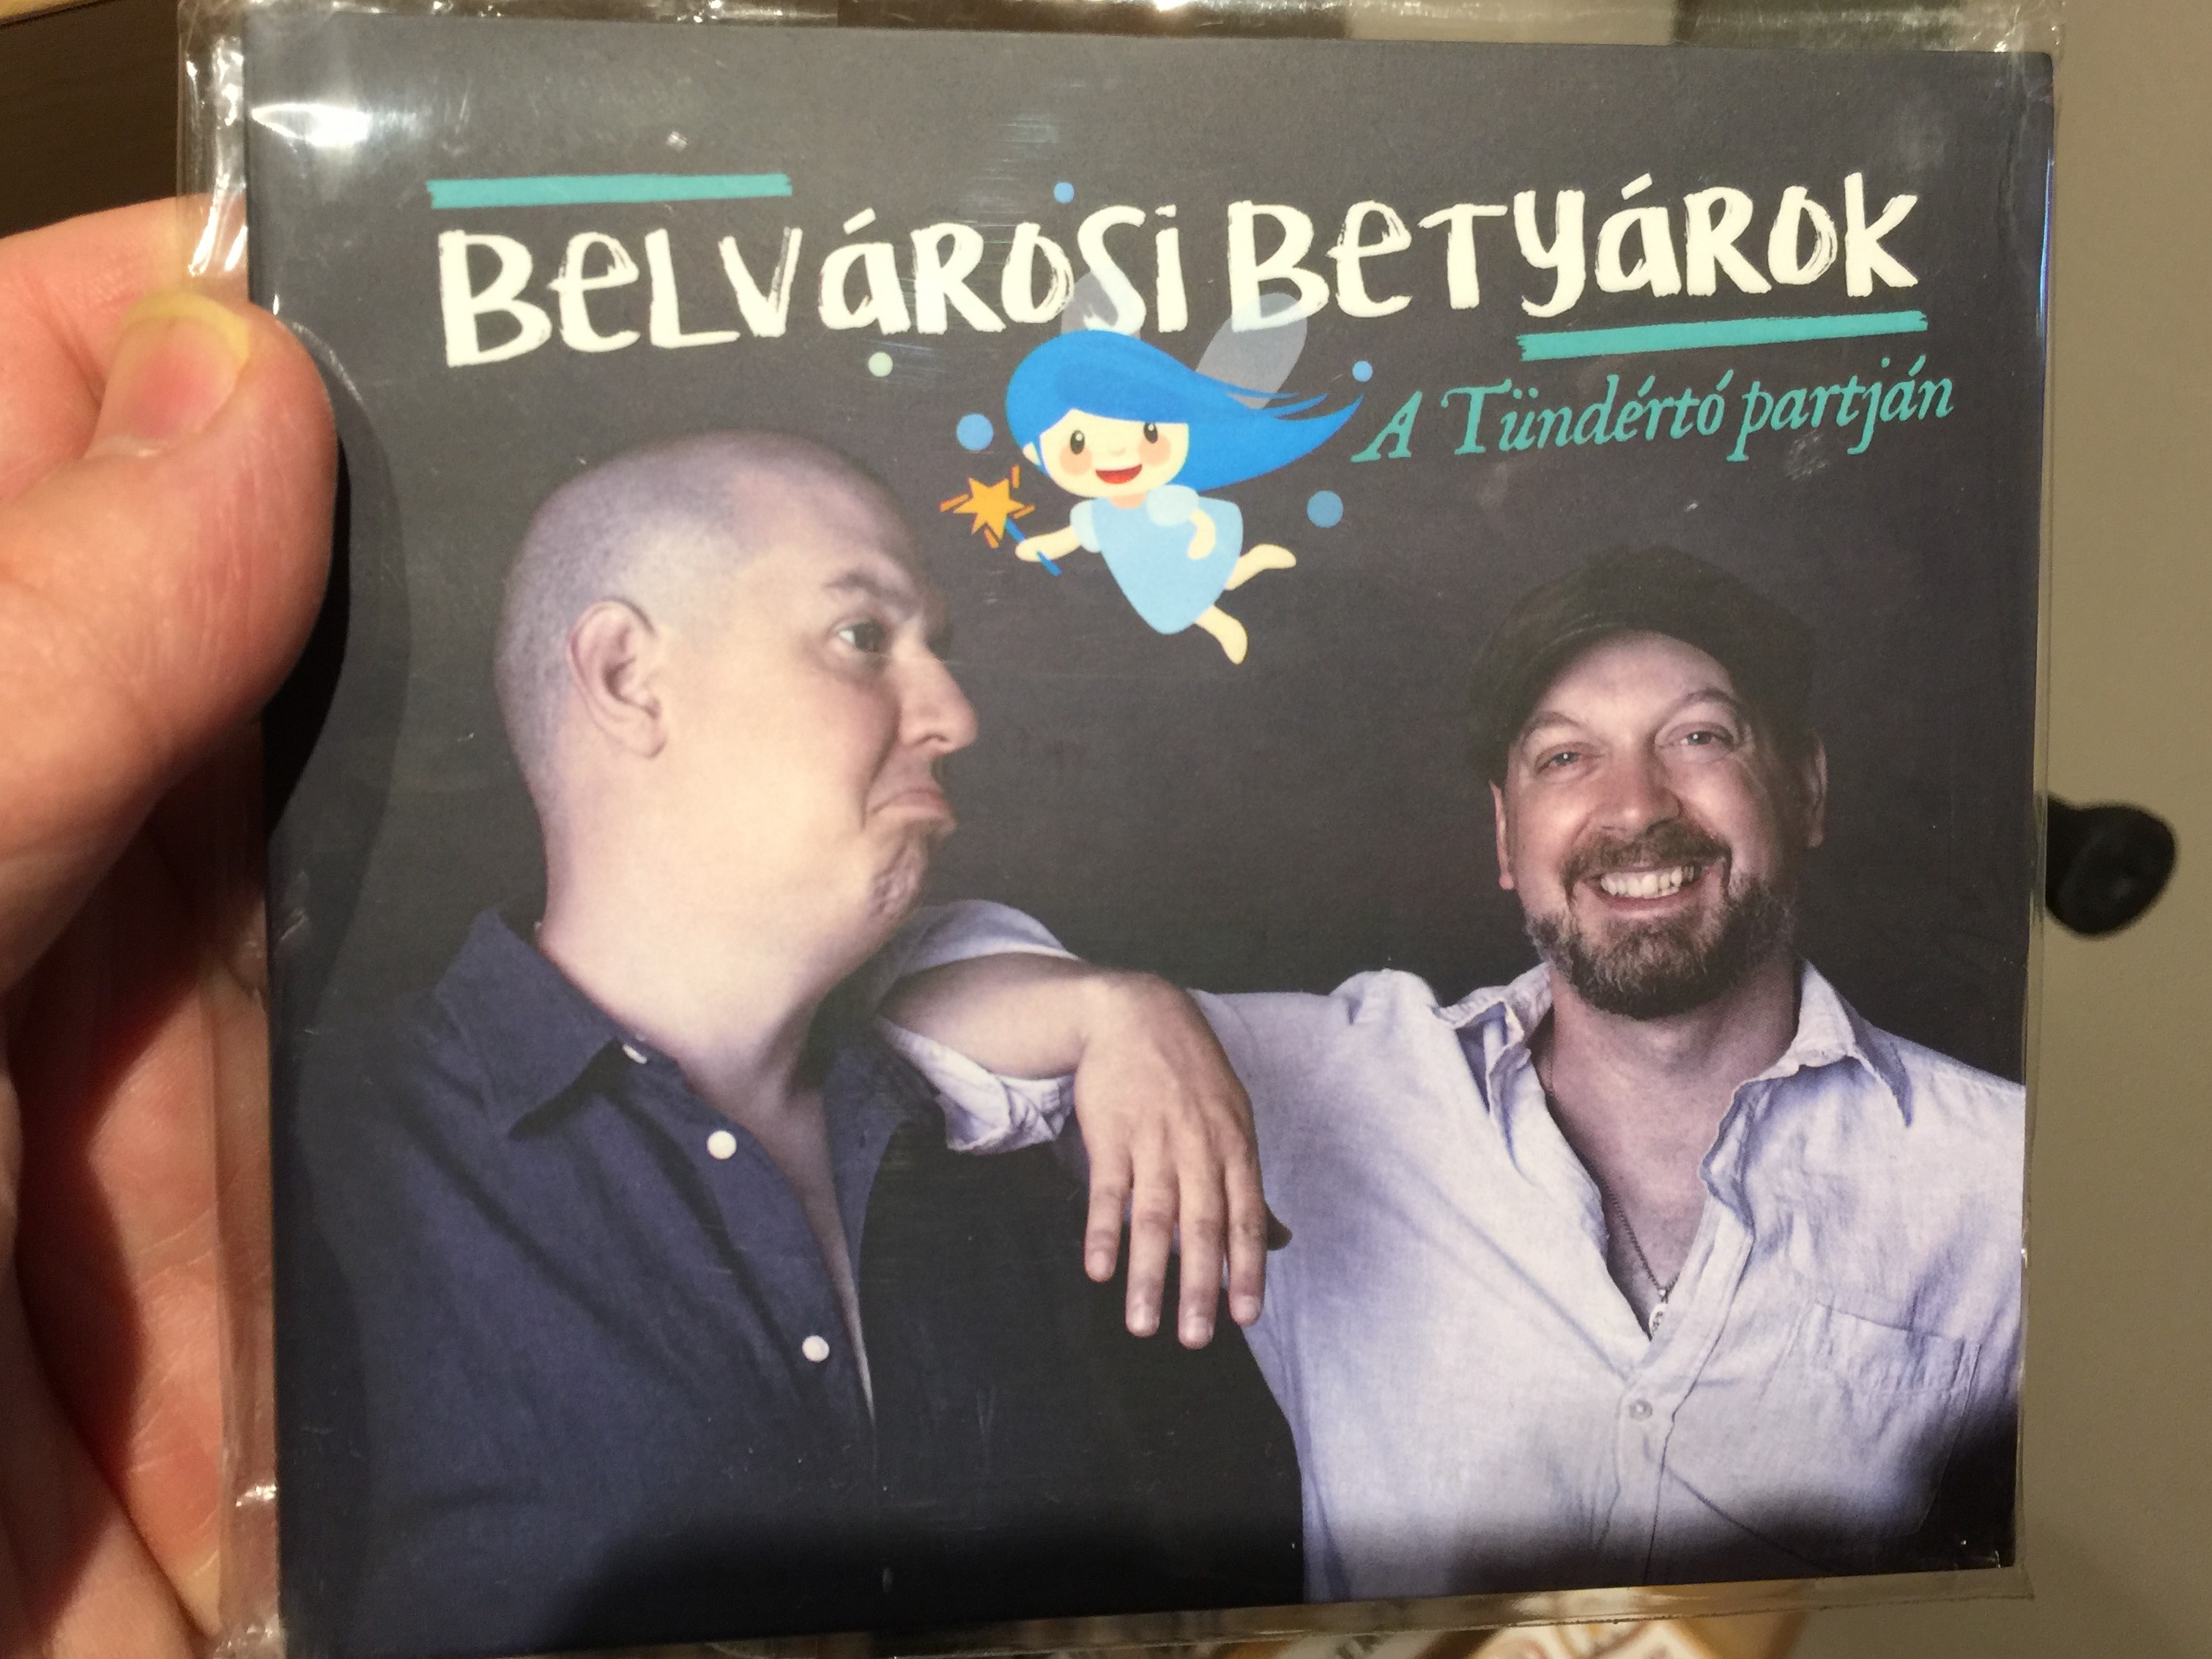 belv-rosi-bety-rok-a-tunderto-partjan-gryllus-audio-cd-2018-gcd-213-1-.jpg